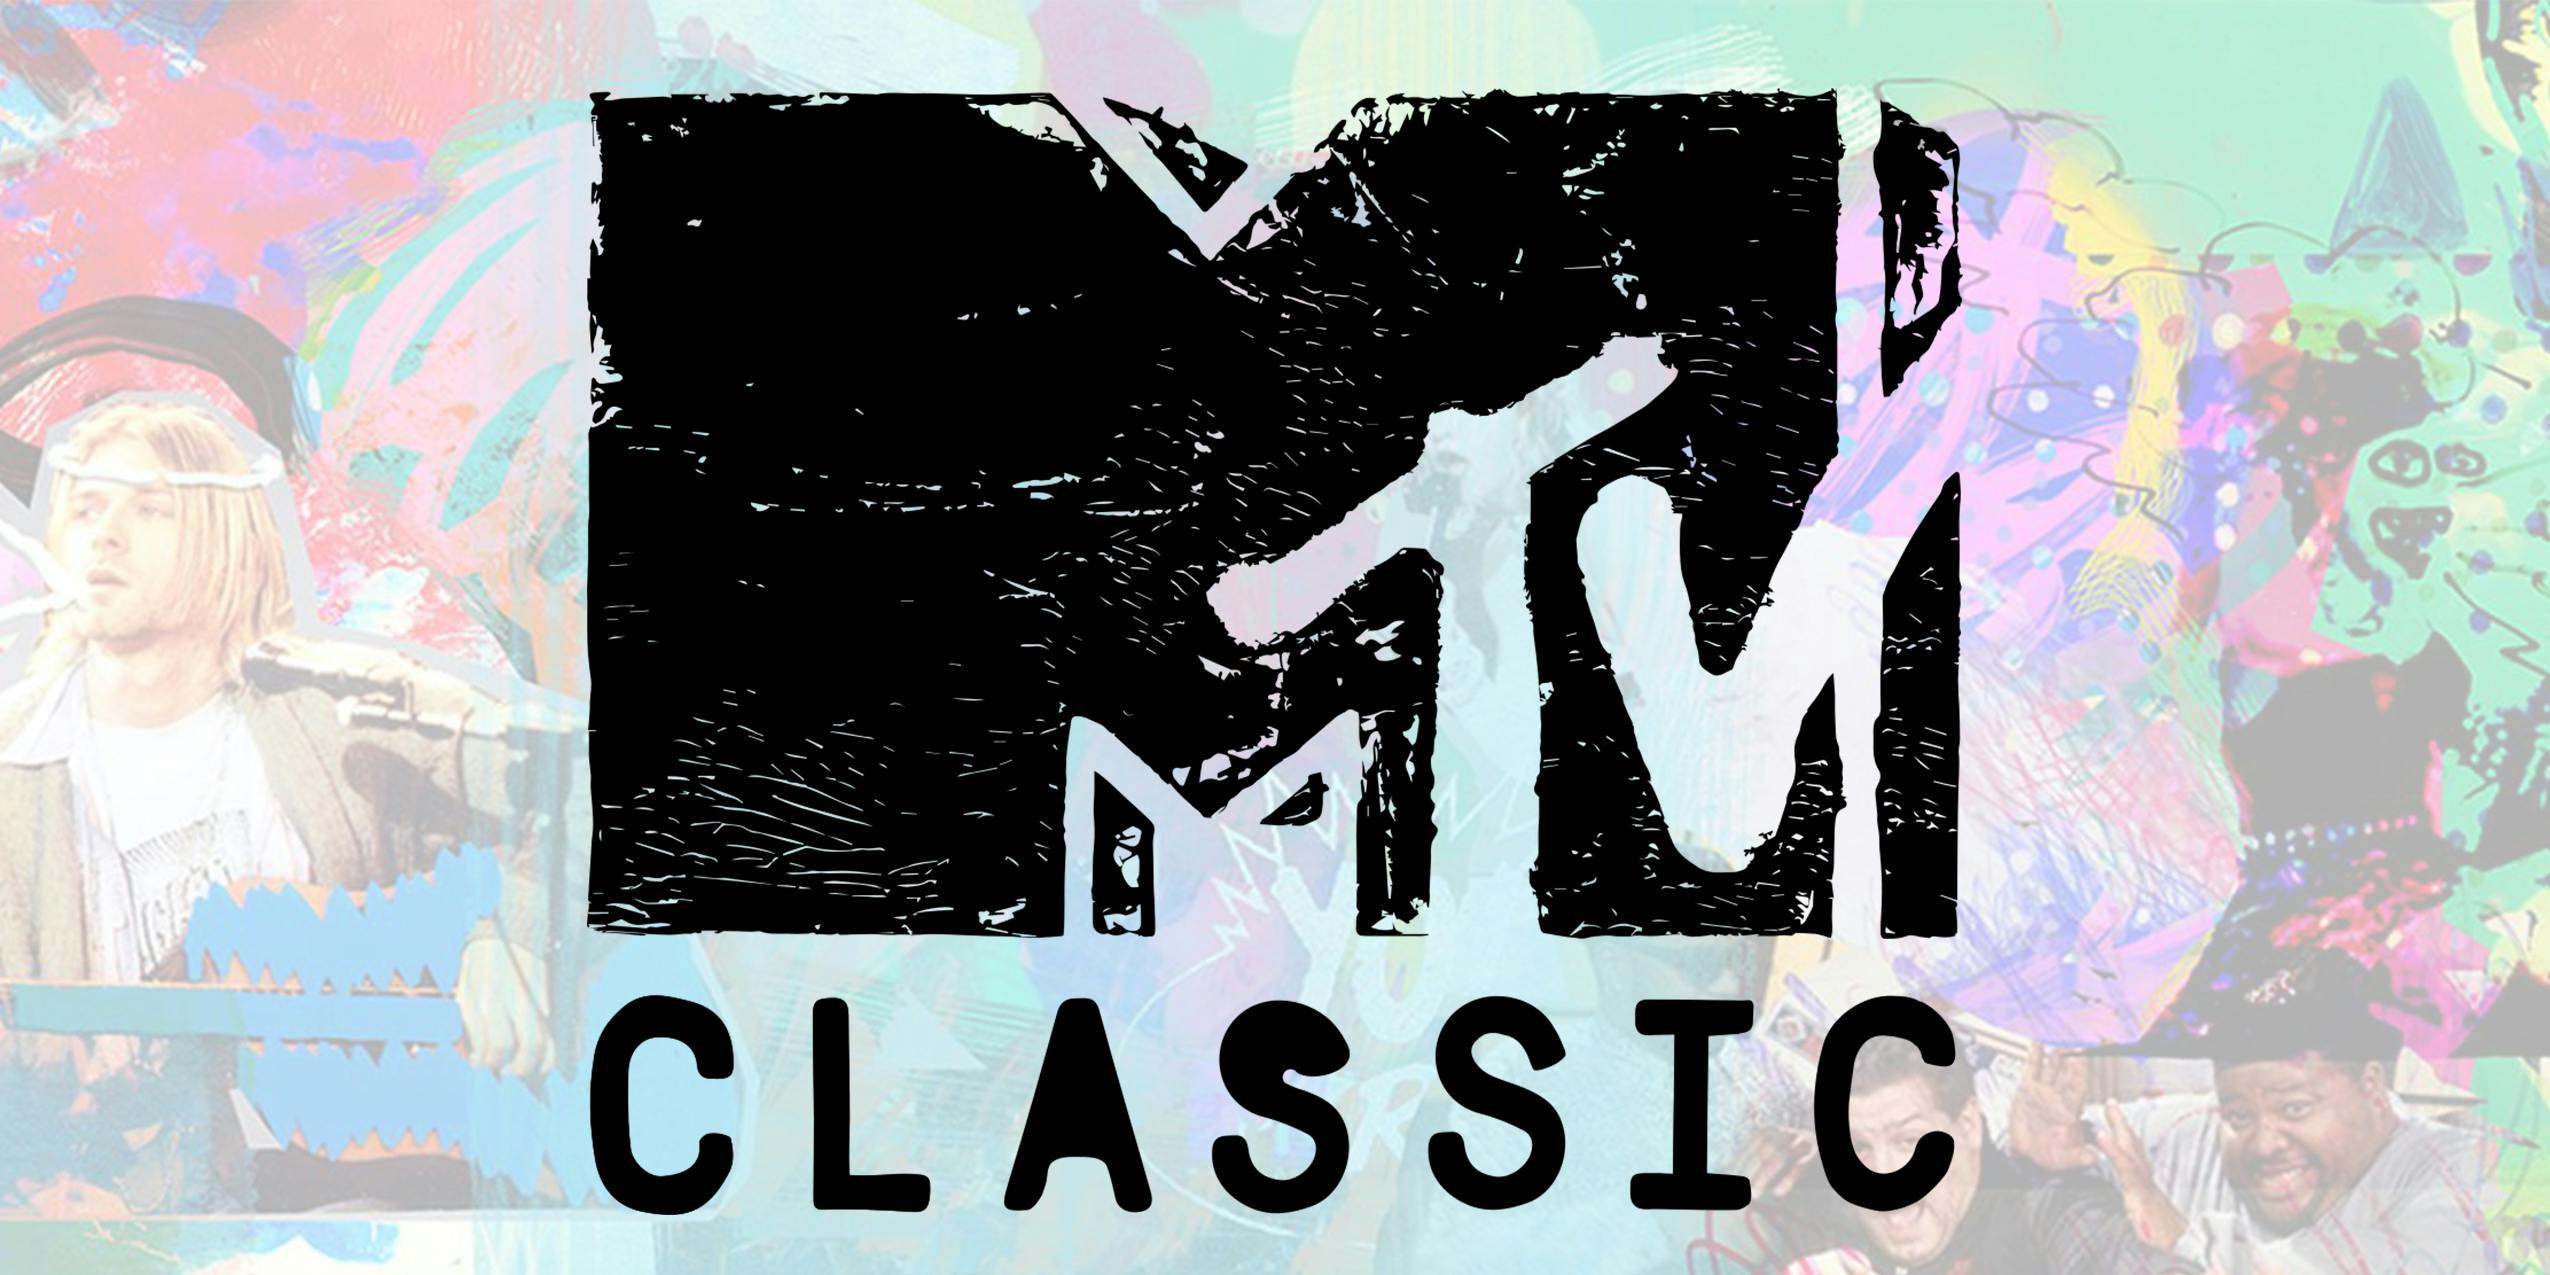 MTV classic live stream